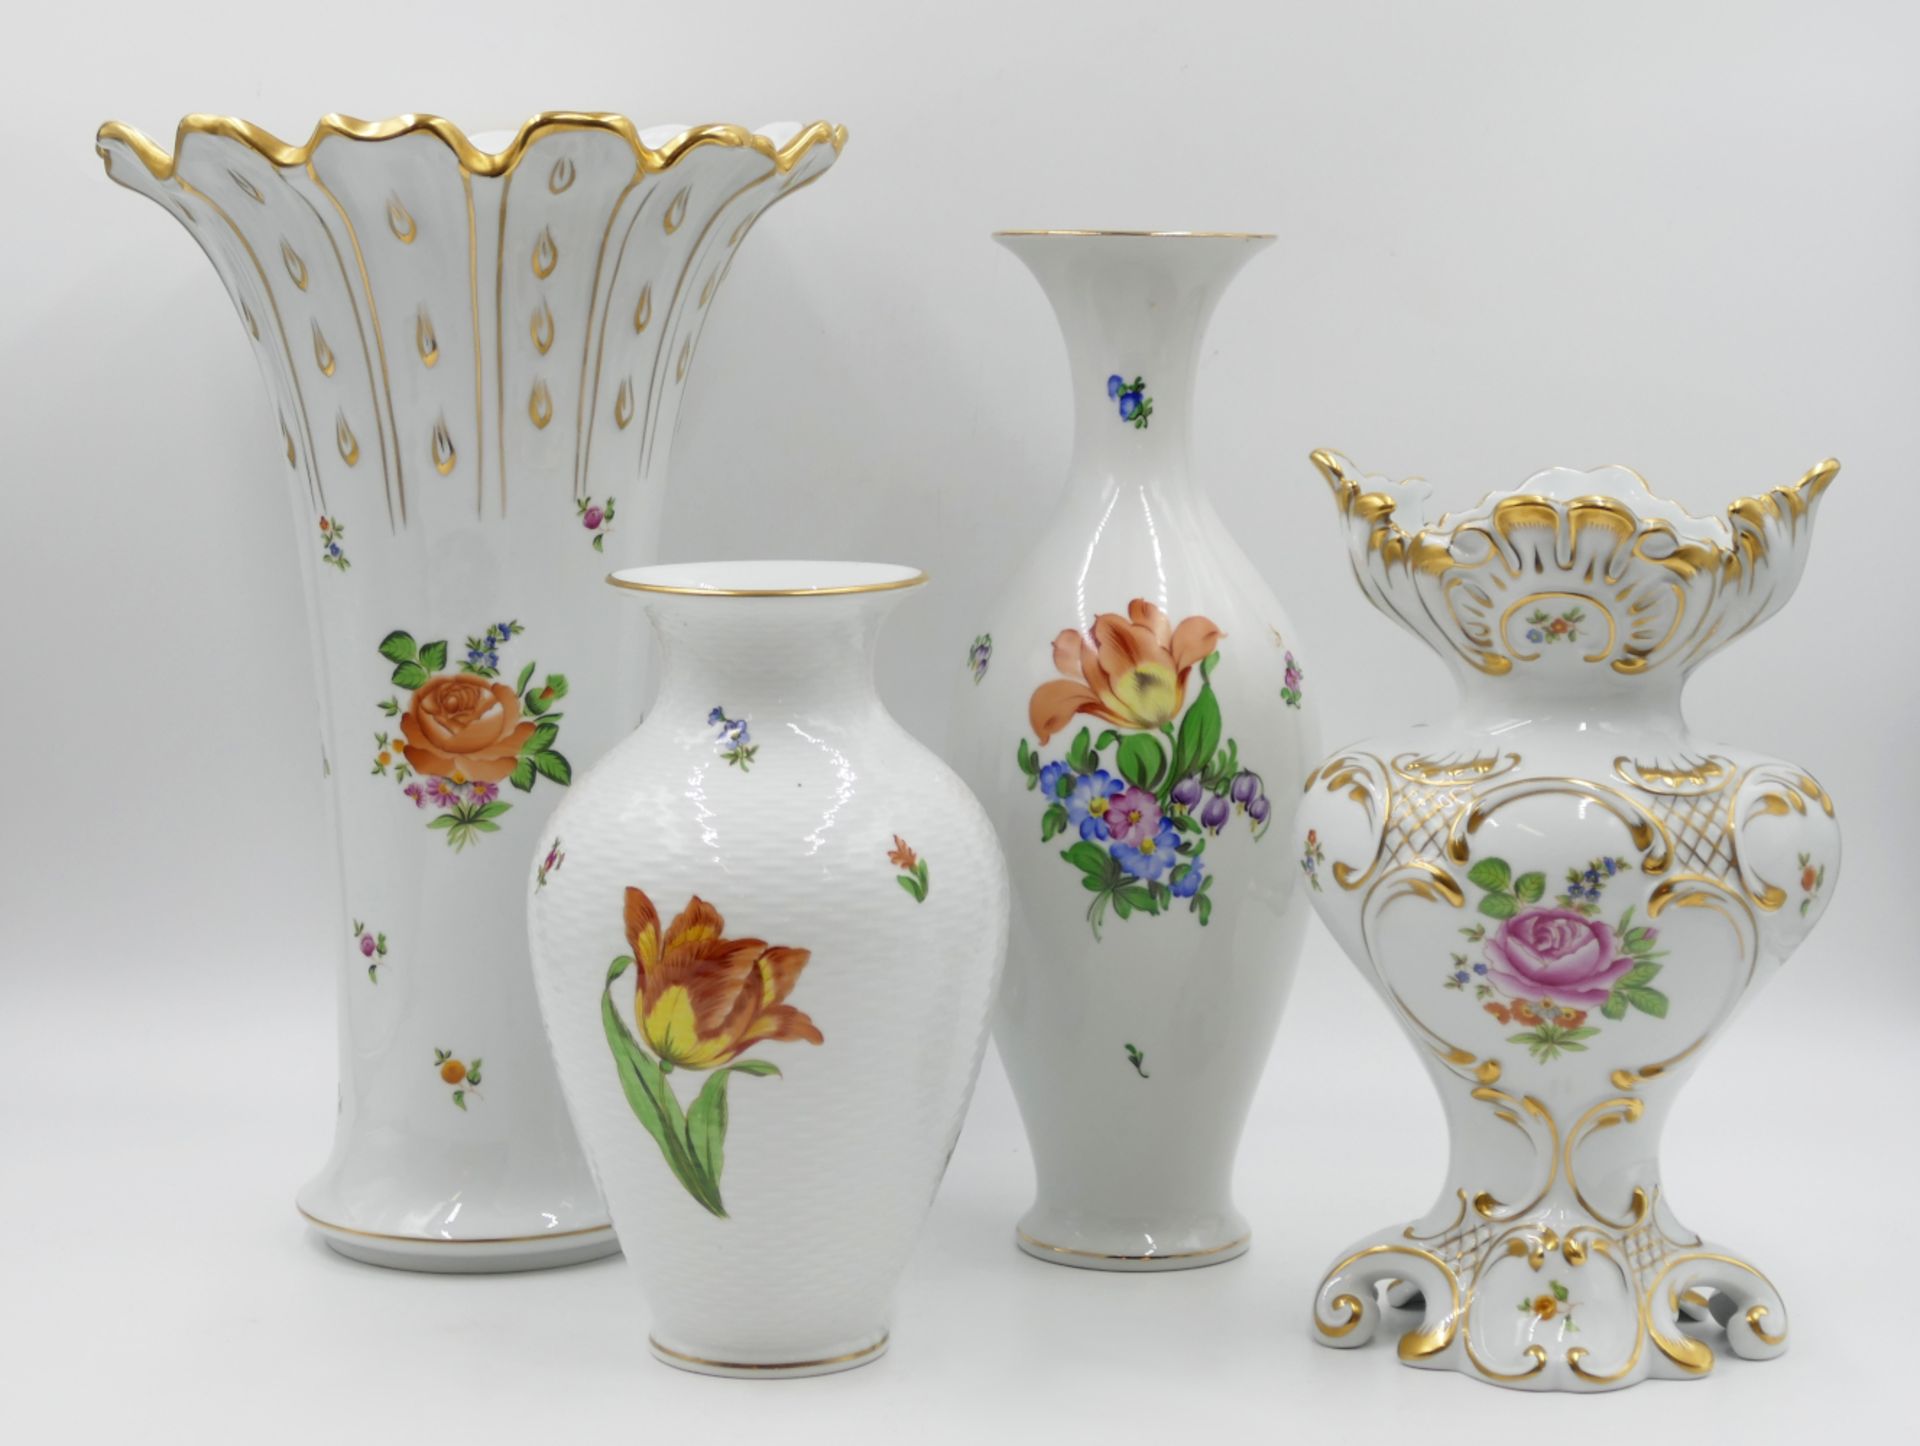 9 Vasen HEREND versch. Dekore z.B. "Rothschild", "Queen Victoria", "Rosa Rose", u.a., z.T. goldstaff - Image 2 of 2